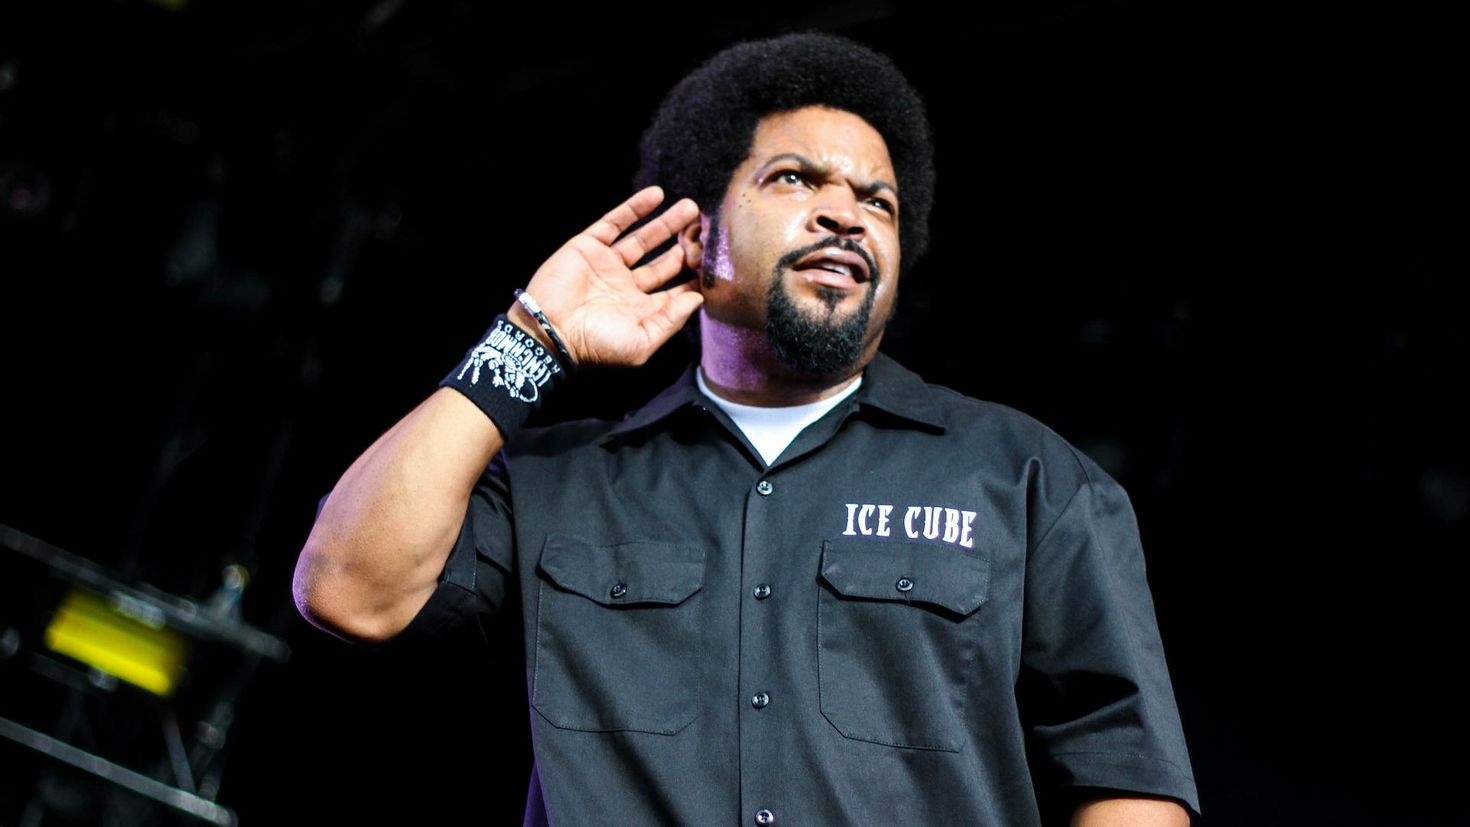 Ice cube me. Ice Cube Rapper. Айс Кьюб (Ice Cube). Ice Cube 2011. Ice Cube 2000.